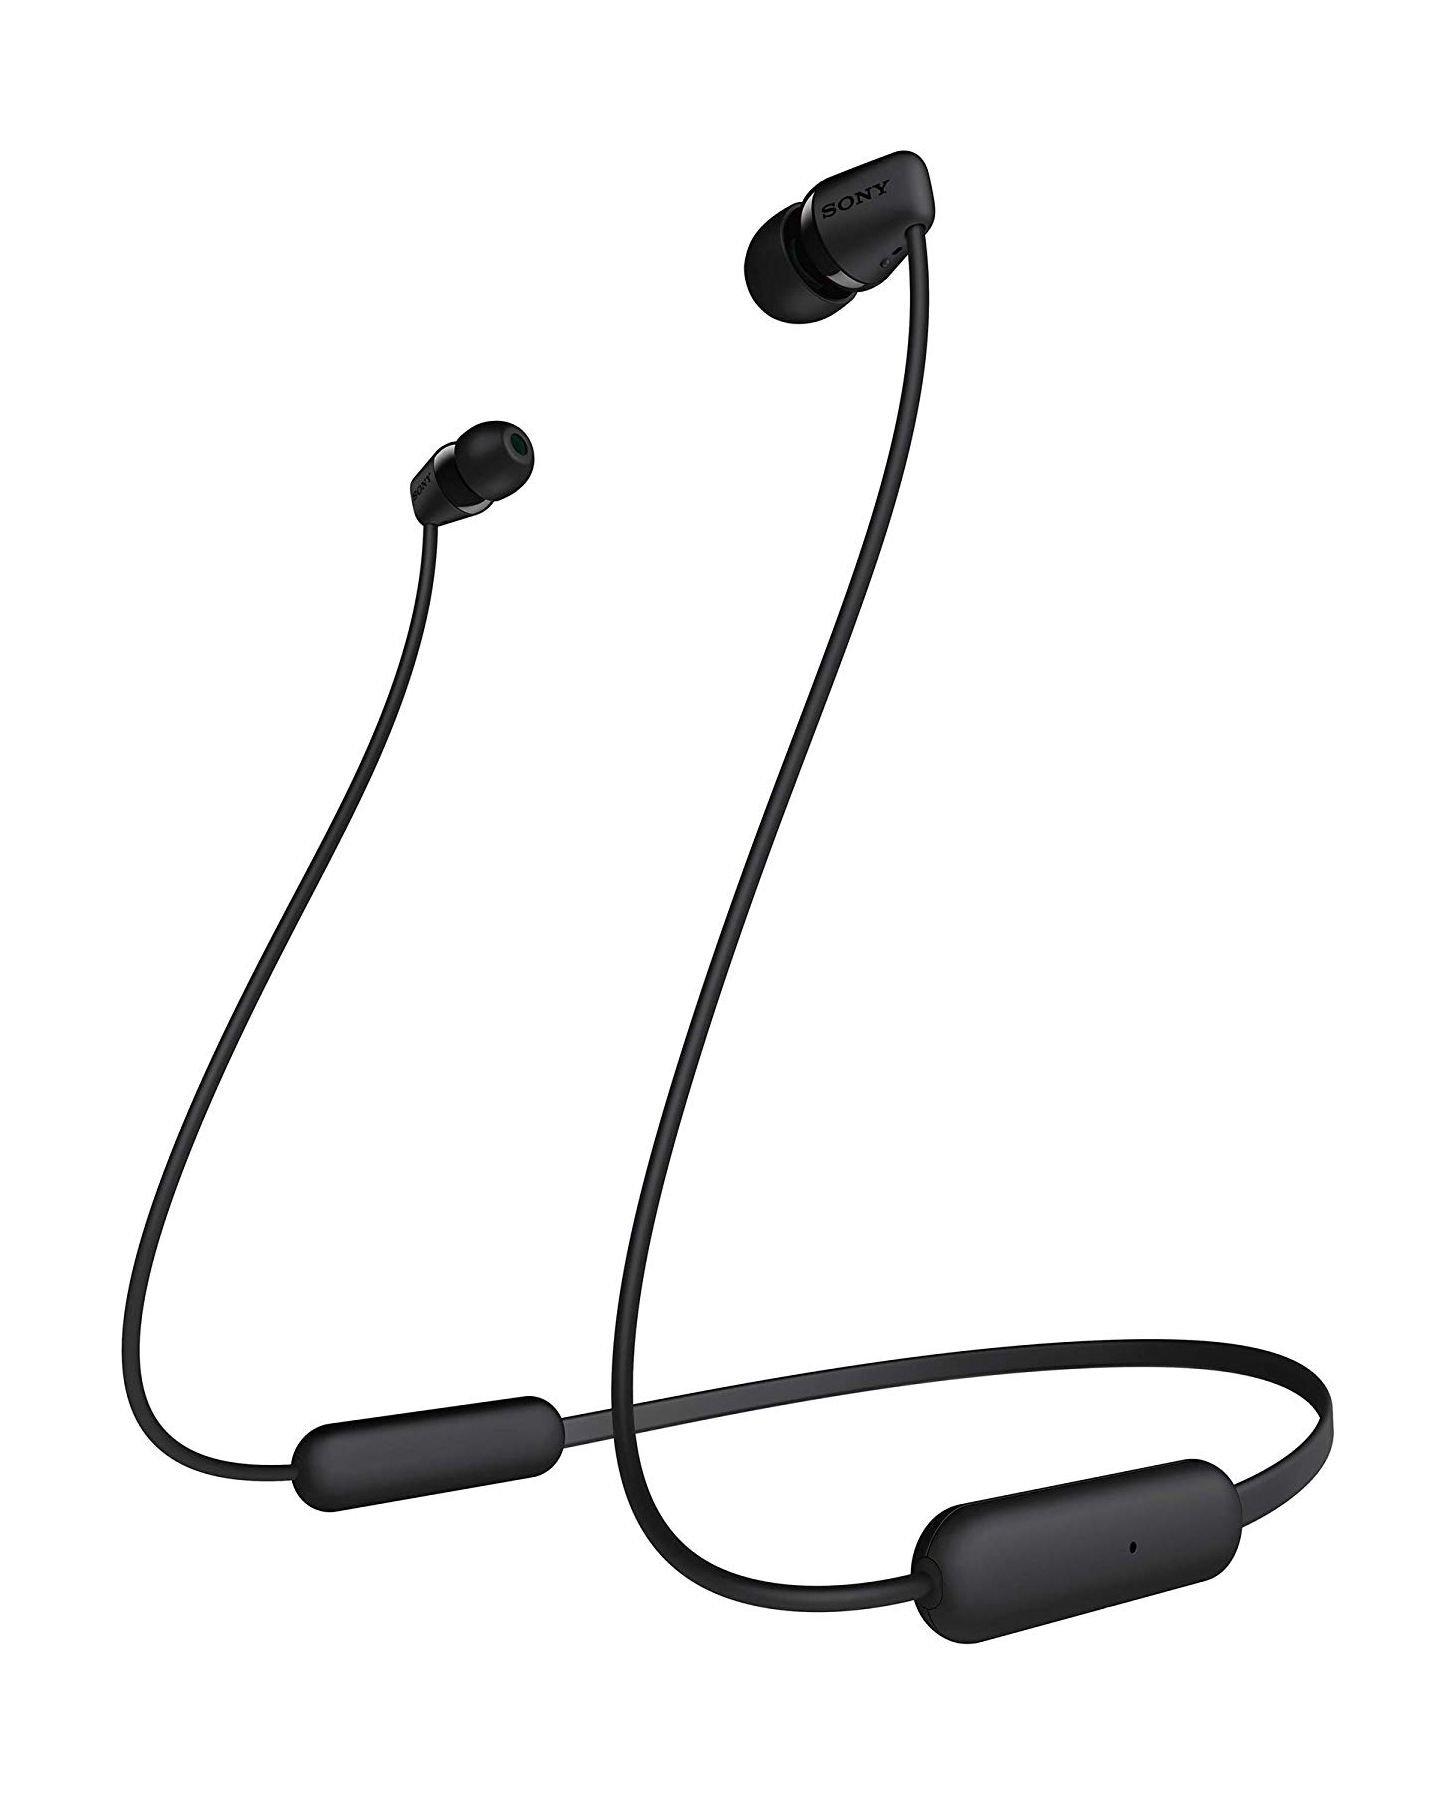 Sony wi-c200 wireless in-ear headphones - black price in Saudi Arabia ...